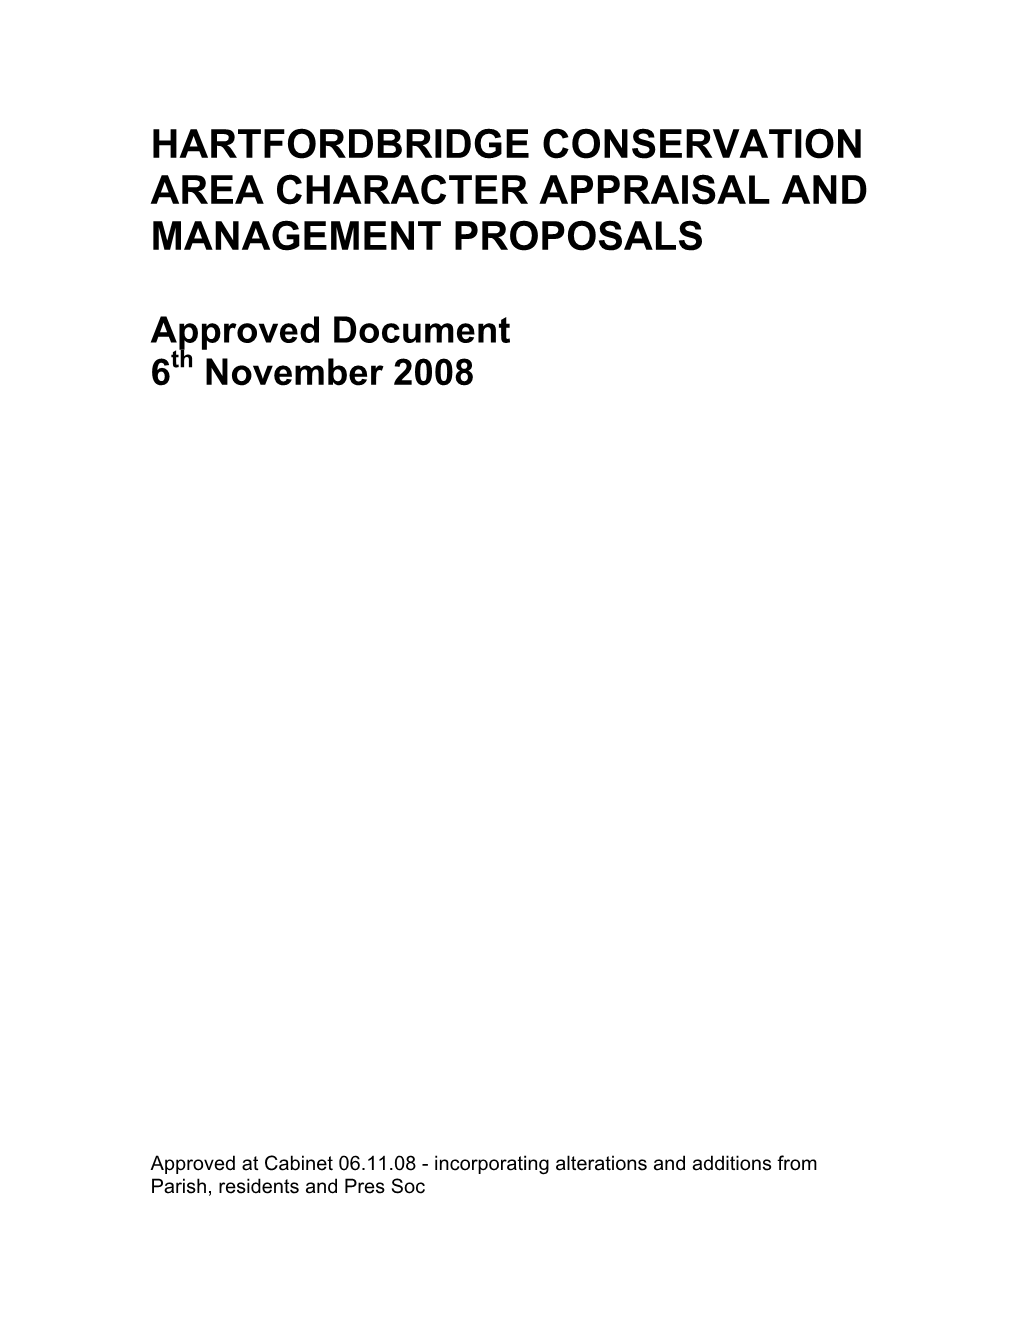 Hartfordbridge Conservation Area Character Appraisal and Management Proposals